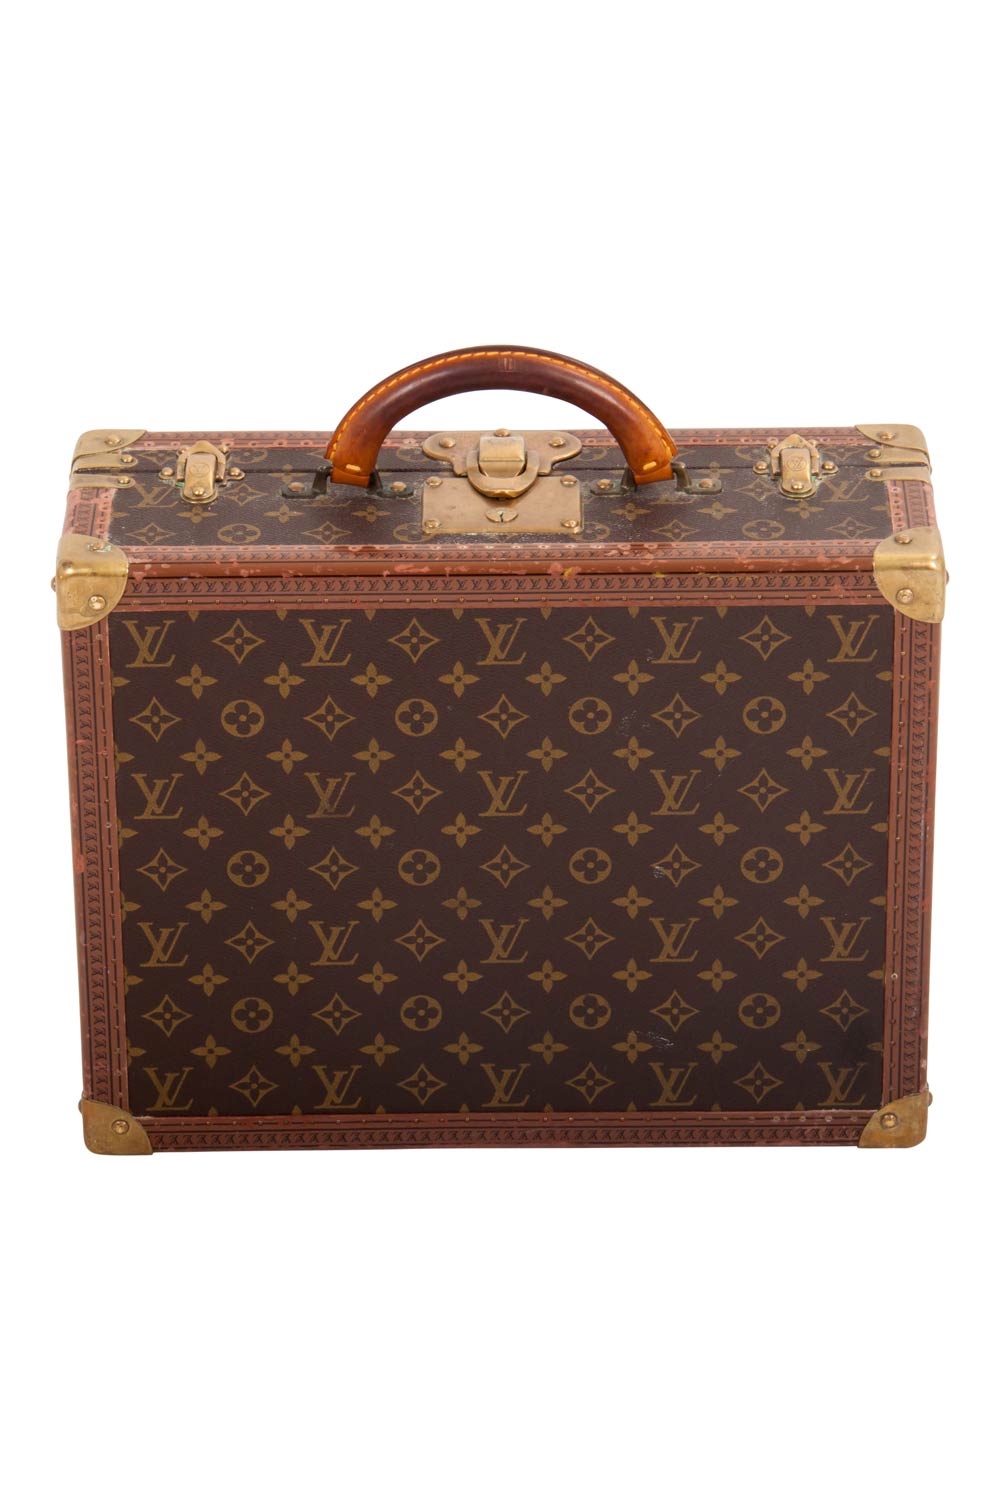 Louis Vuitton Monogram Canvas Cotteville 40 Carry On Luggage Trunk ...